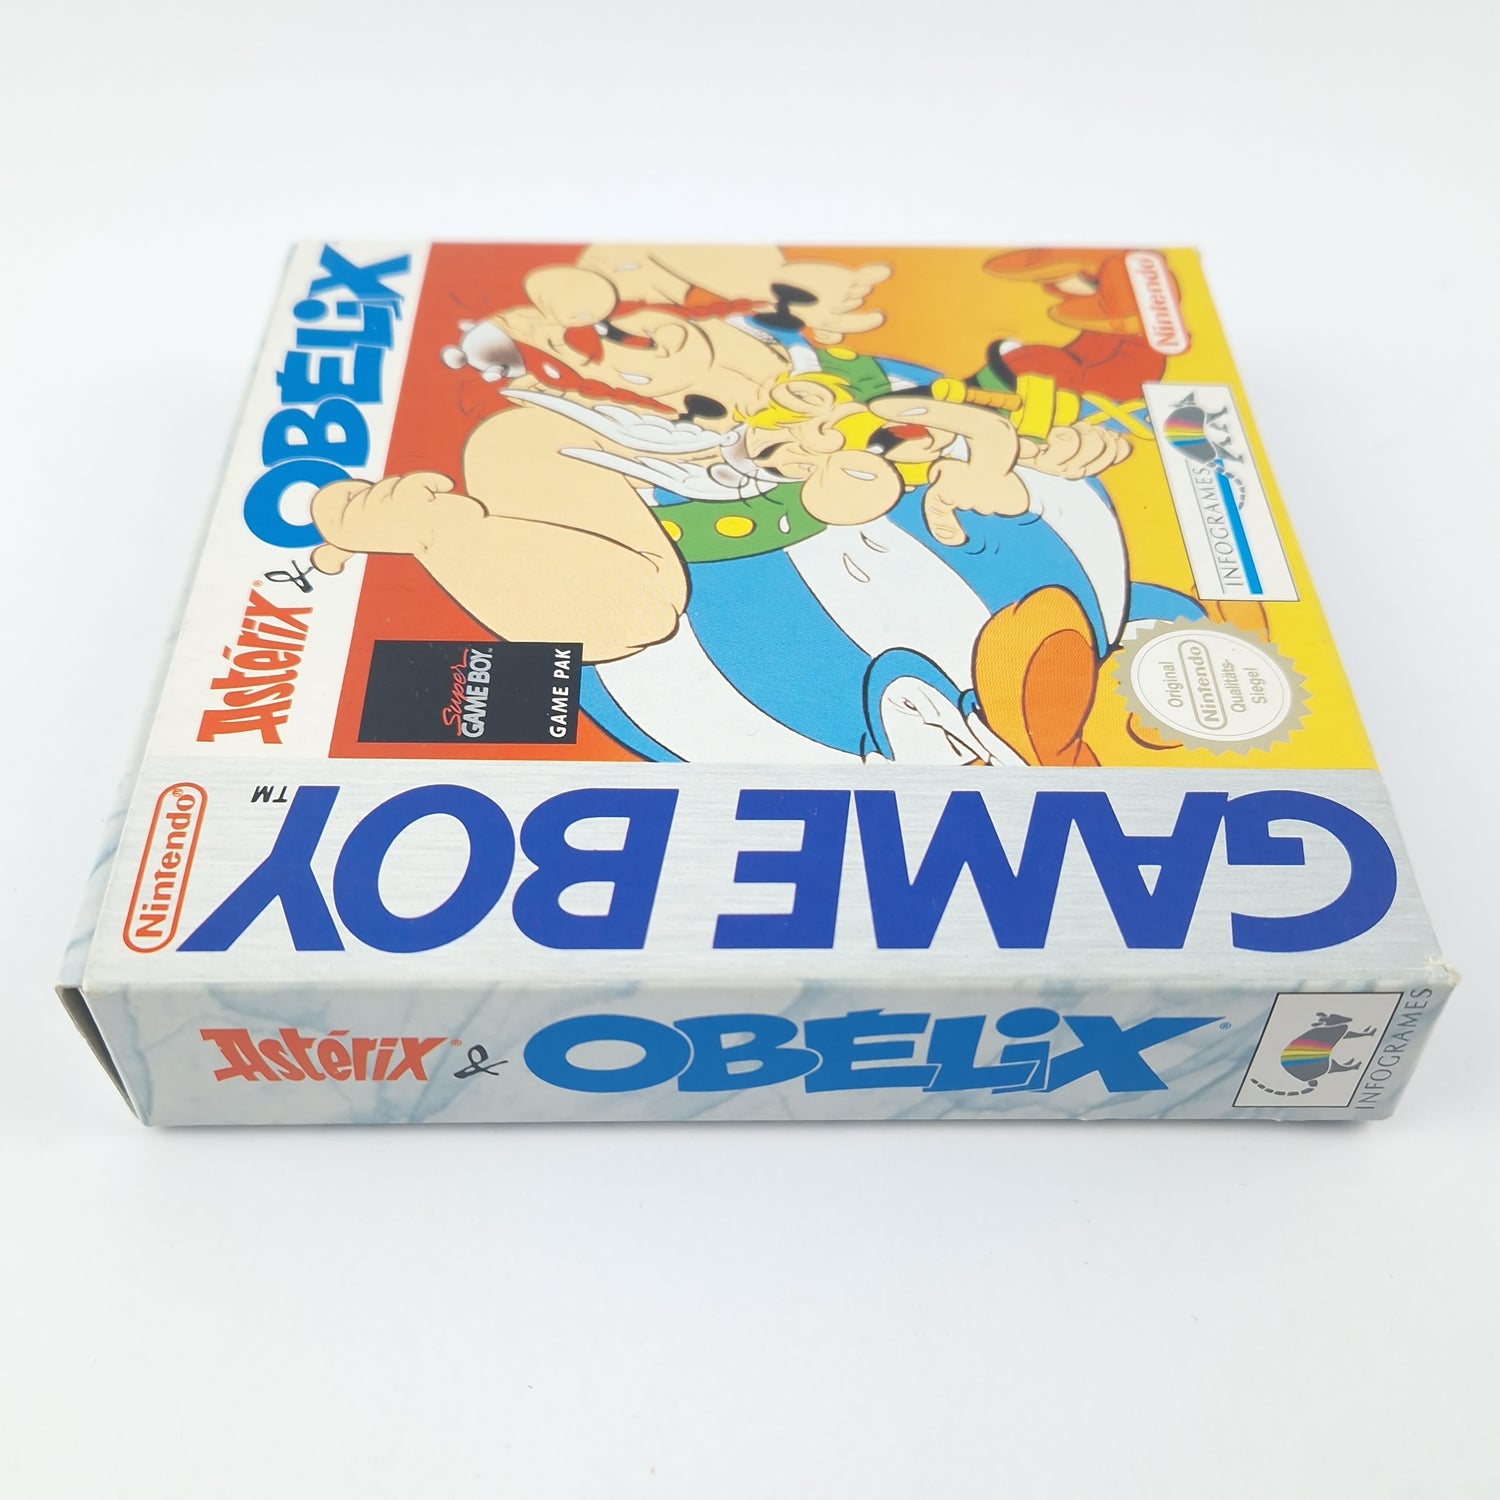 Nintendo Game Boy Classic Game: Asterix & Obelix - GAMEBOY OVP PAL NOE-1